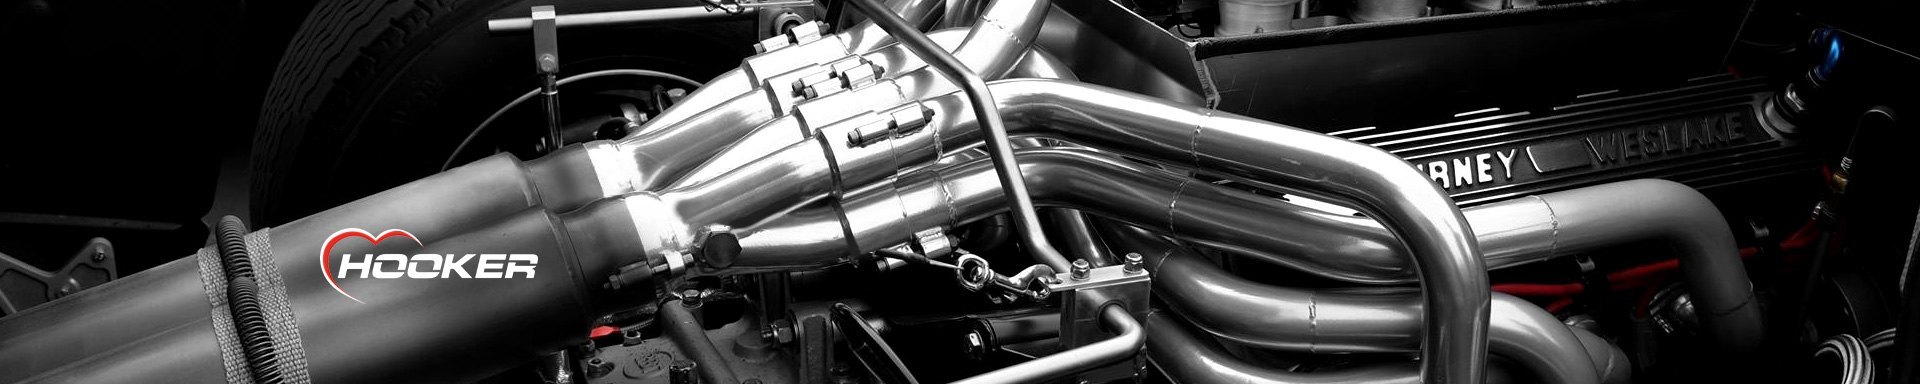 Hooker Racing Engines & Components